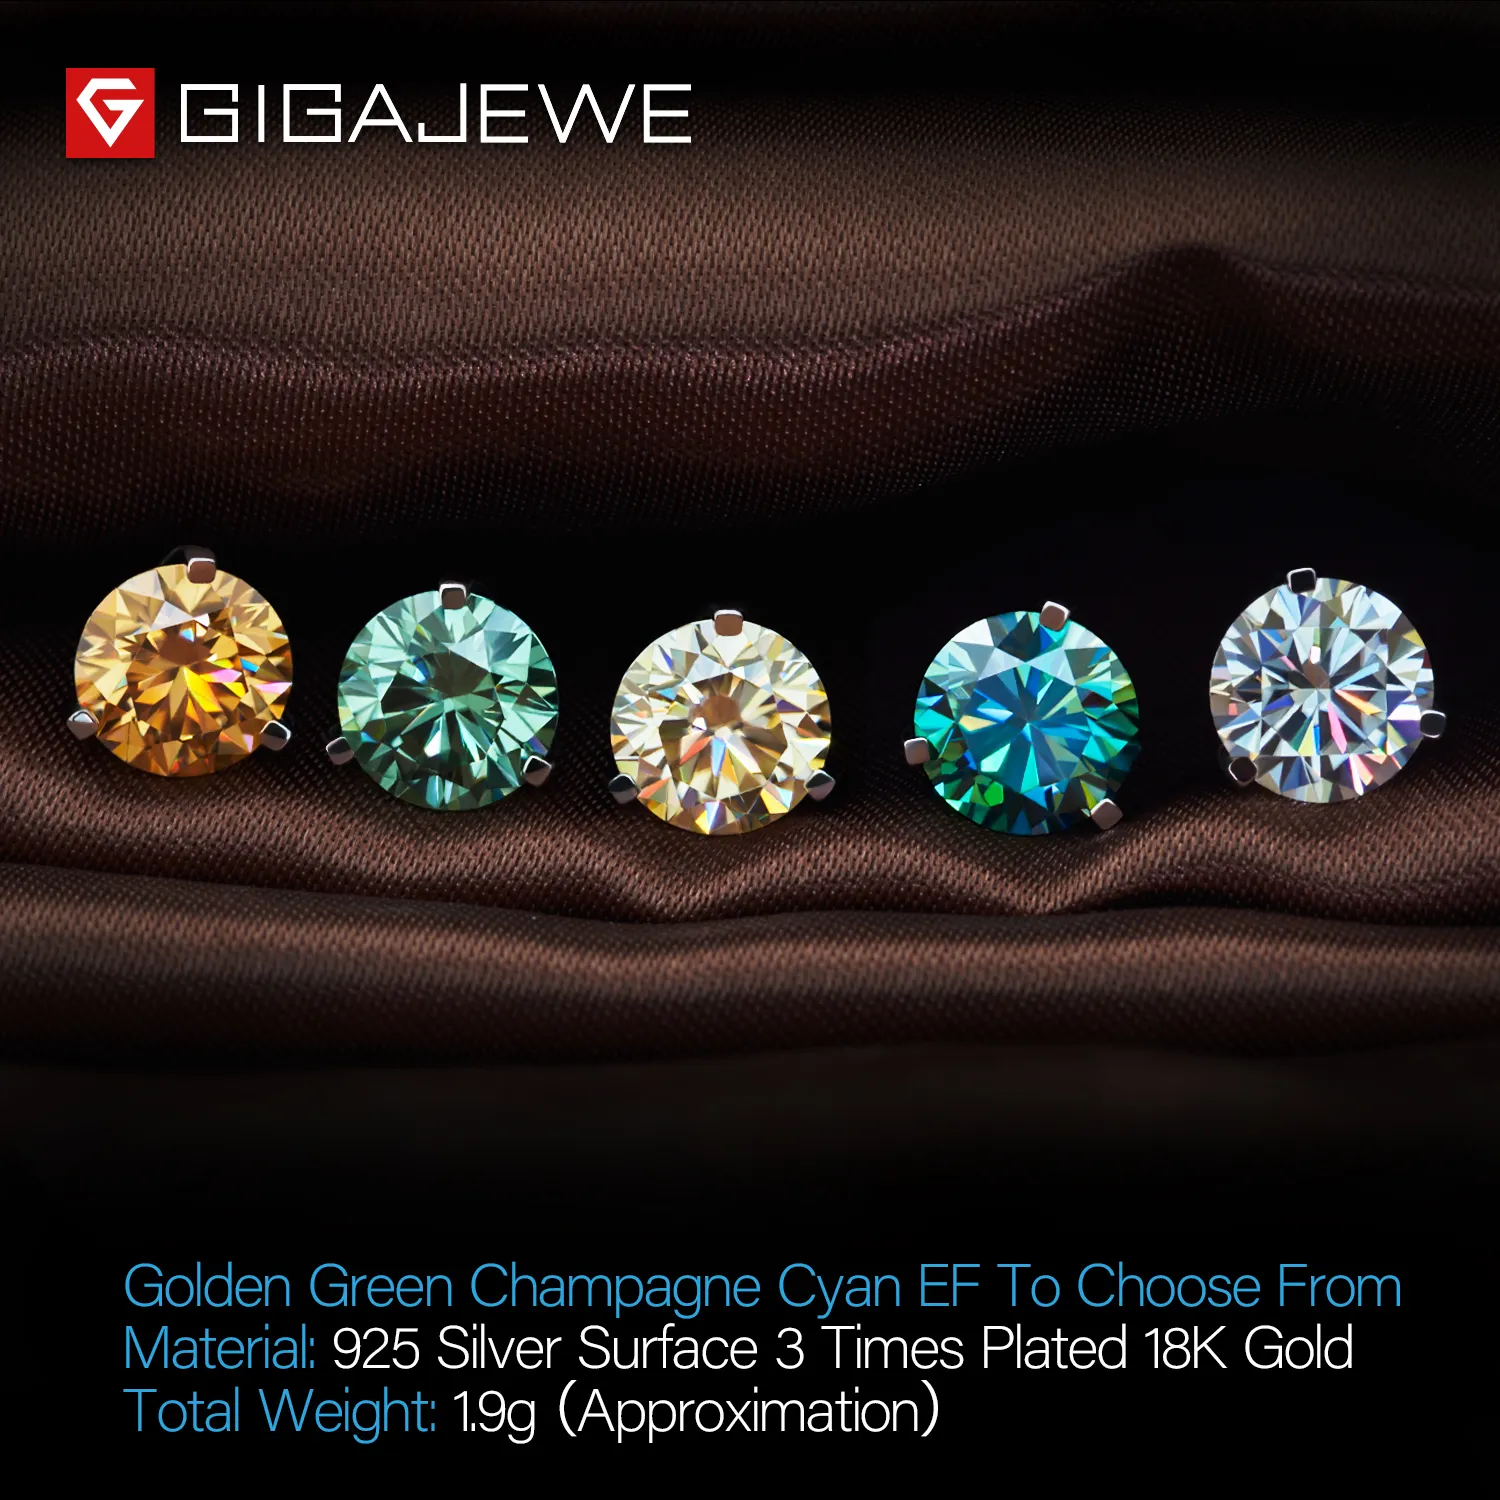 GIGAJEWE Totaal 3ct EF VVS1 Diamond Stud Earring Moissanite 18K wit goud verguld 925 zilveren sieraden vrouw vriendin cadeau GMSE-014301o